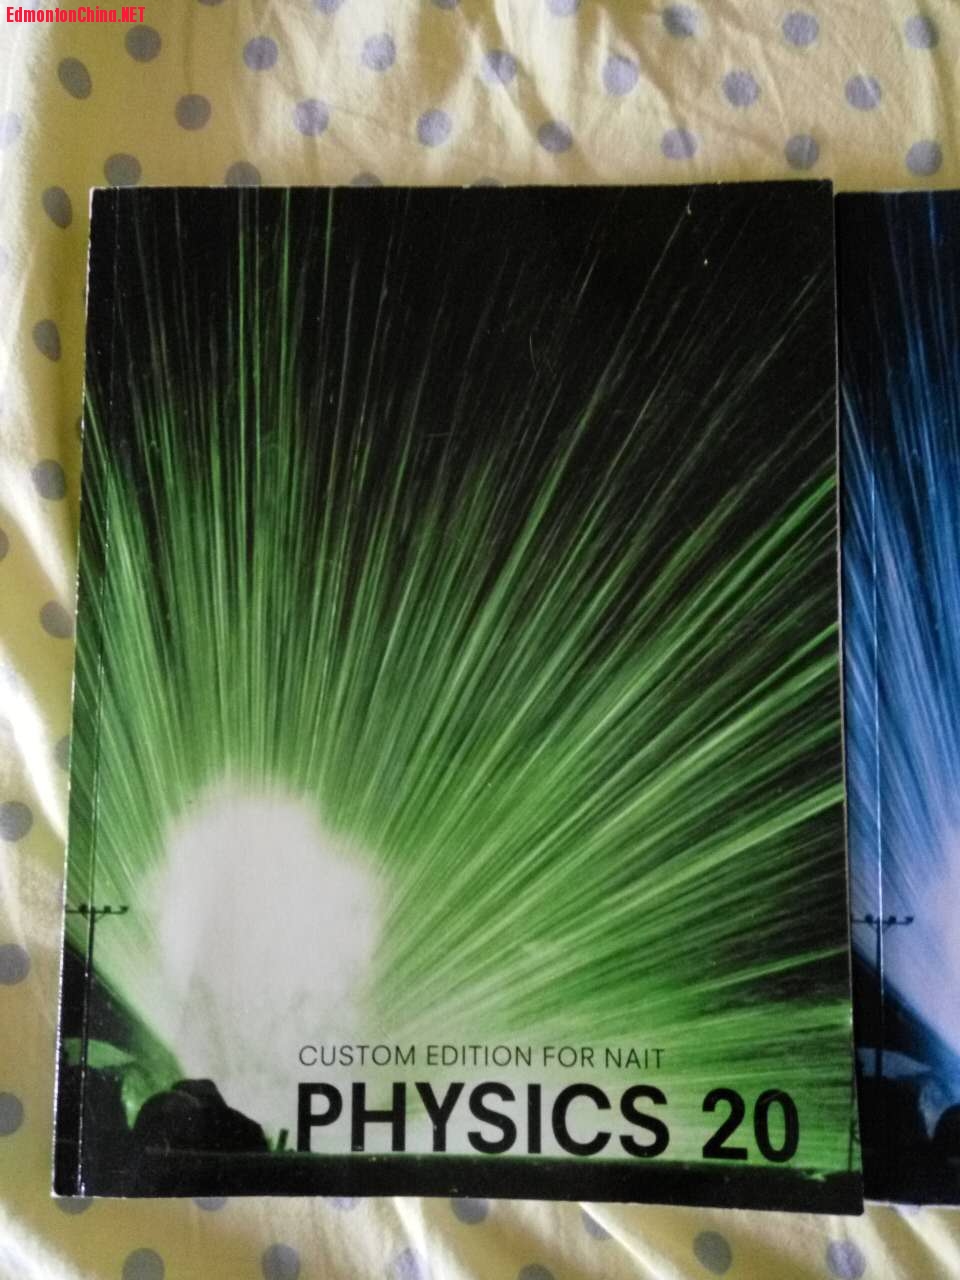 physics20.jpg